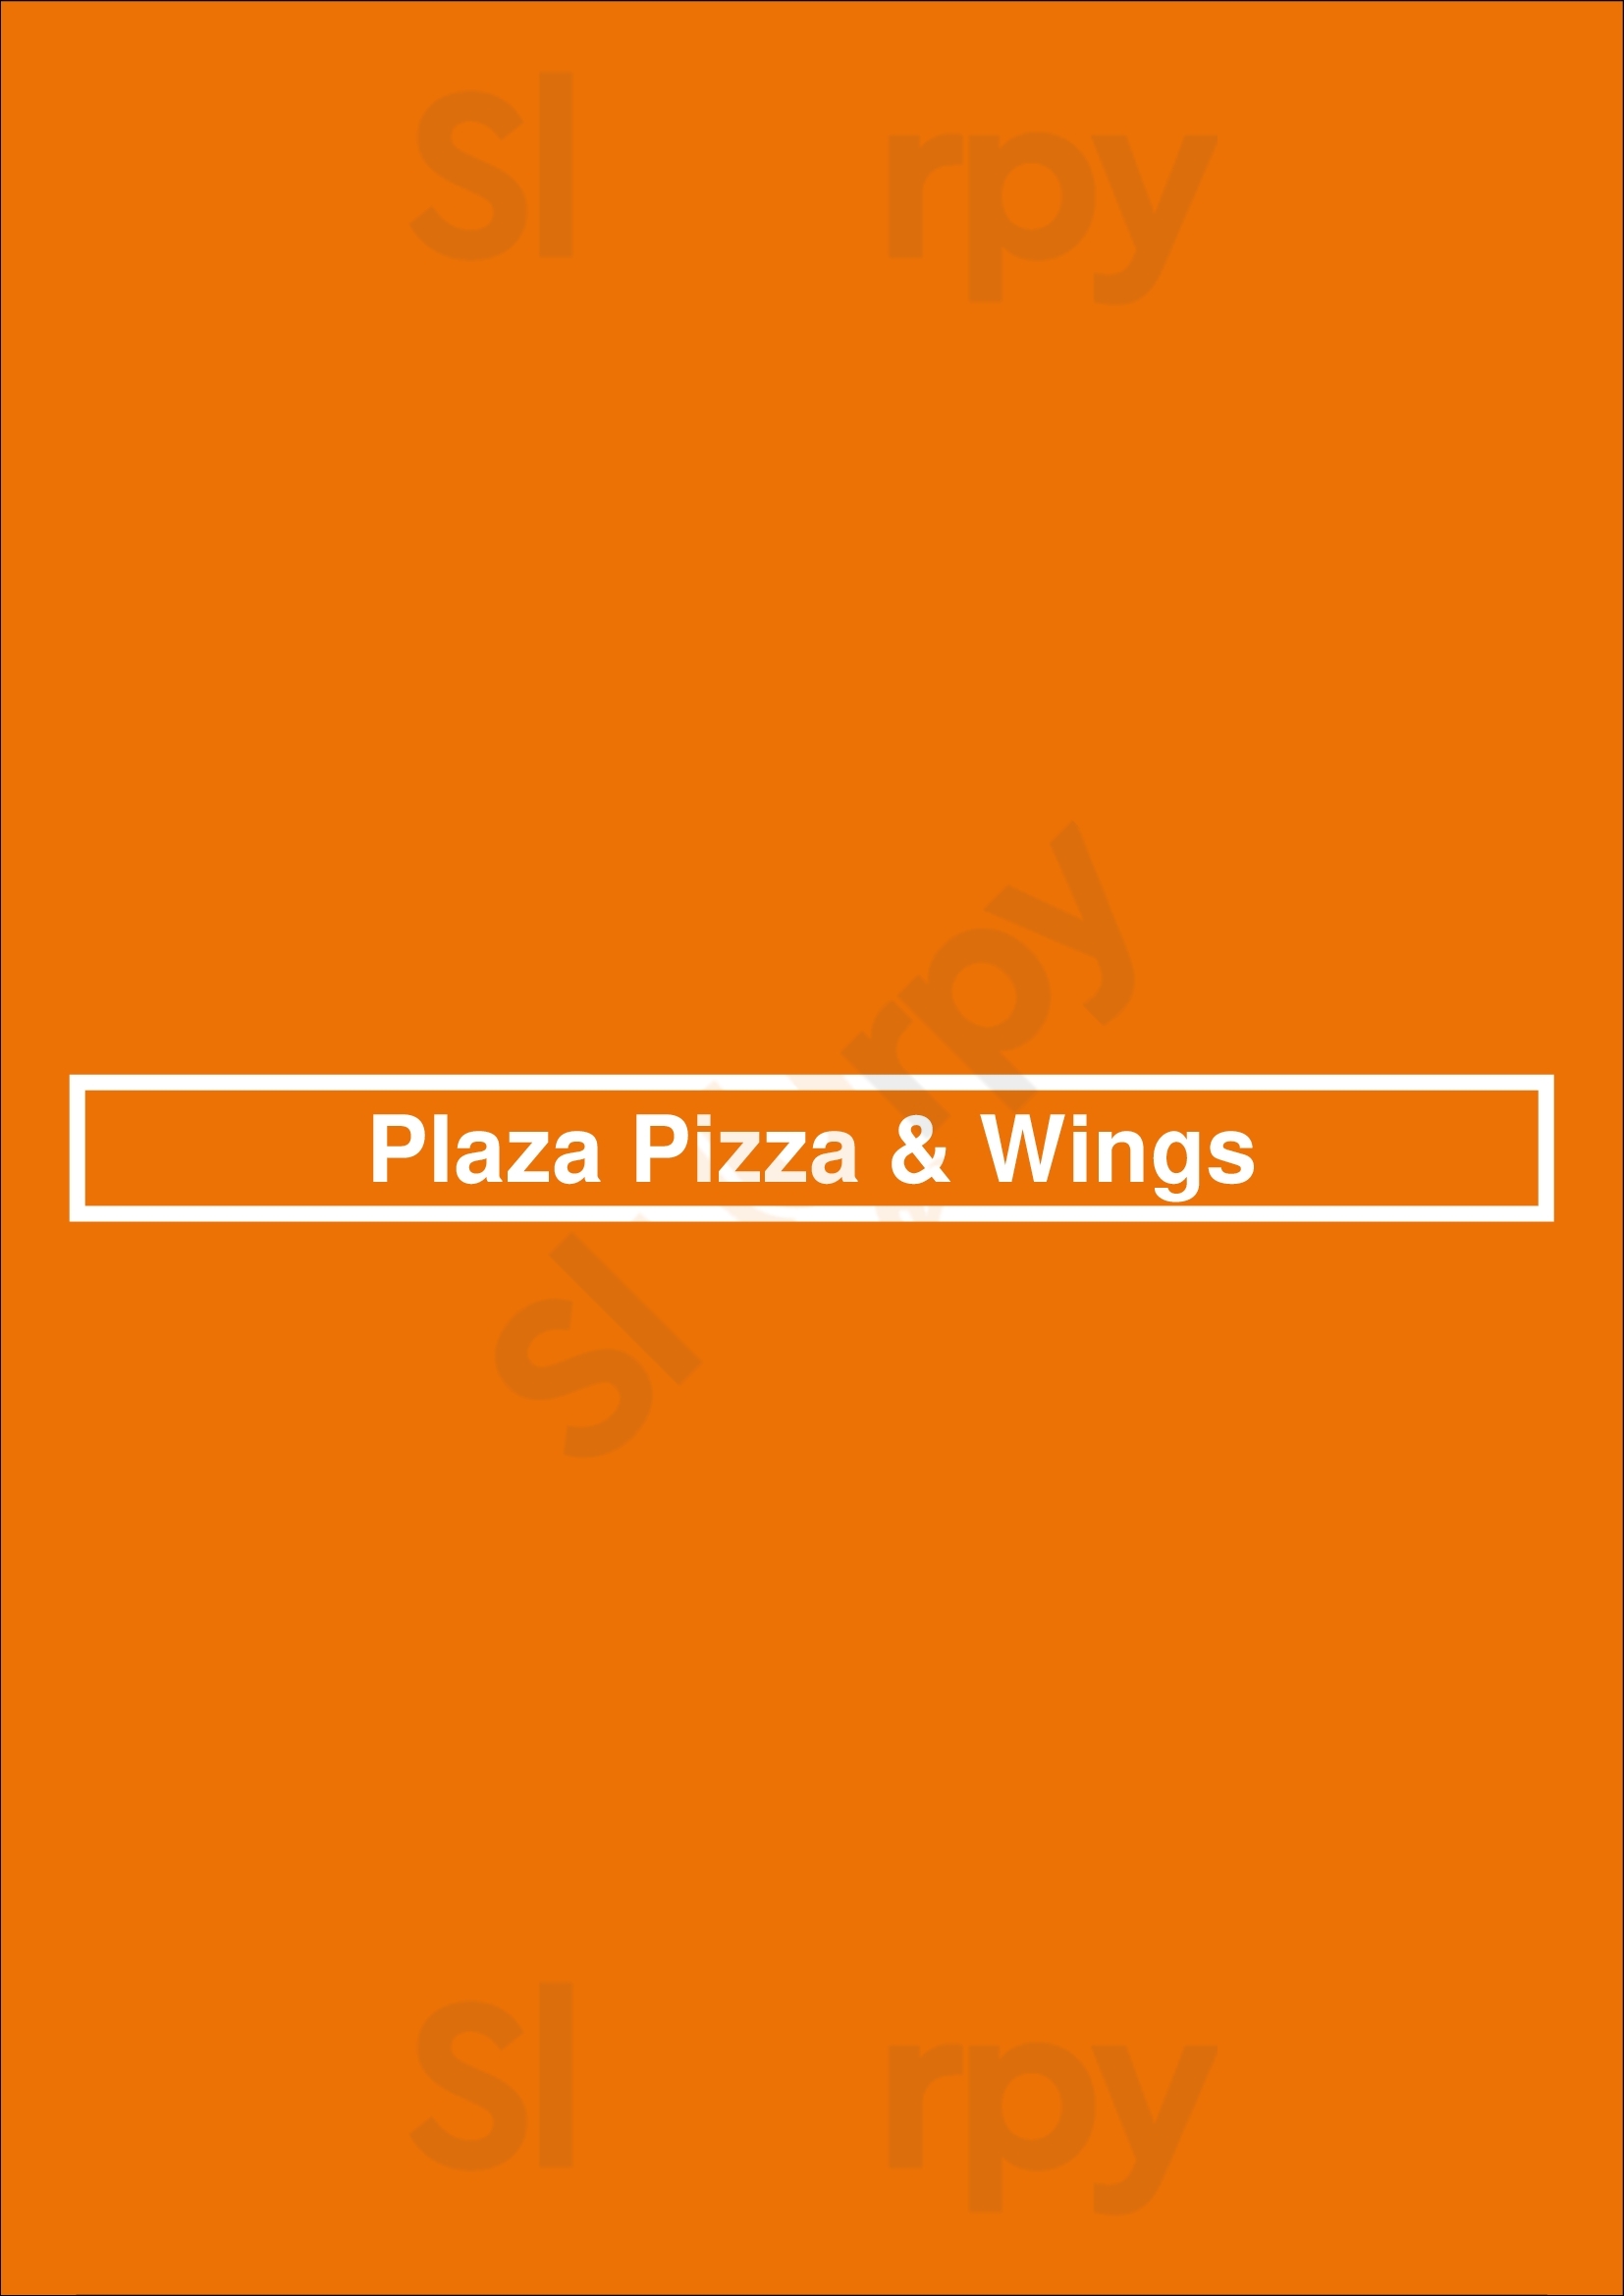 Plaza Pizza & Wings Hamilton Menu - 1